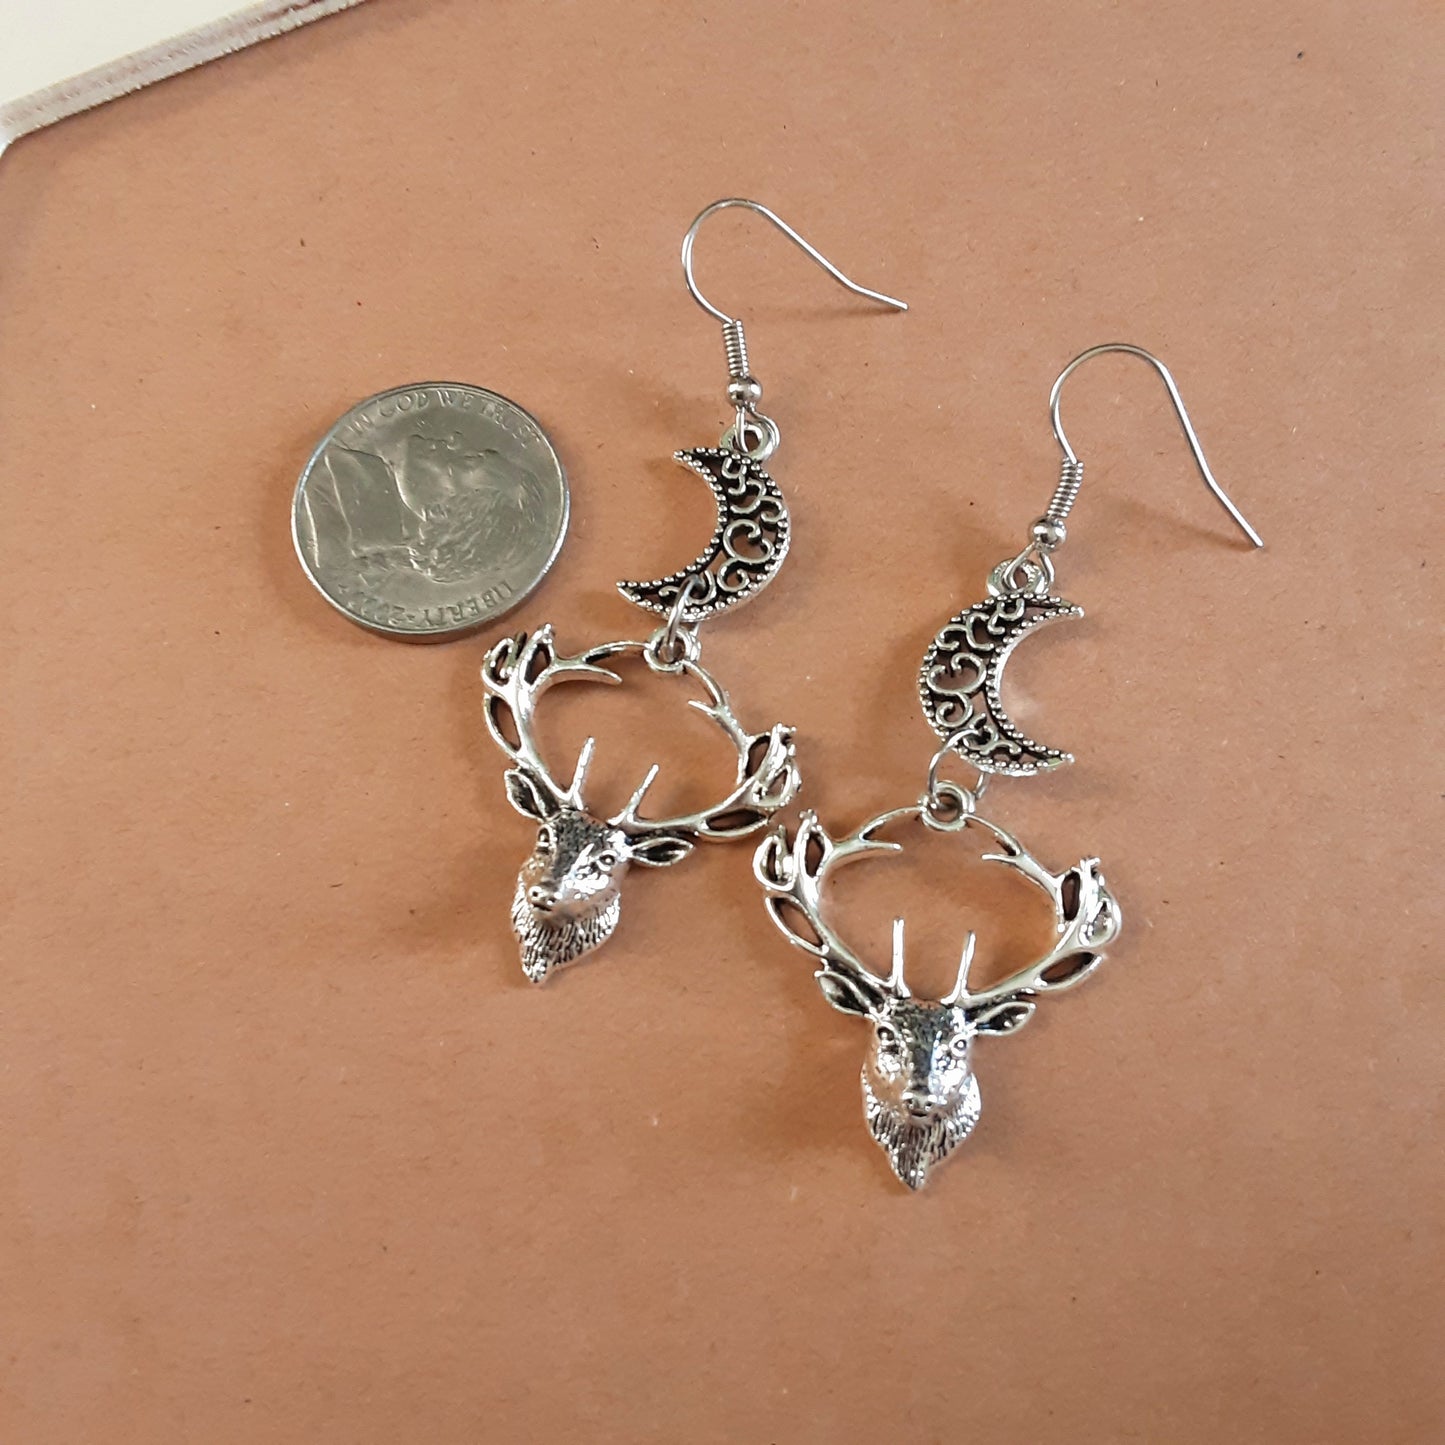 Deer and crescent moon earrings